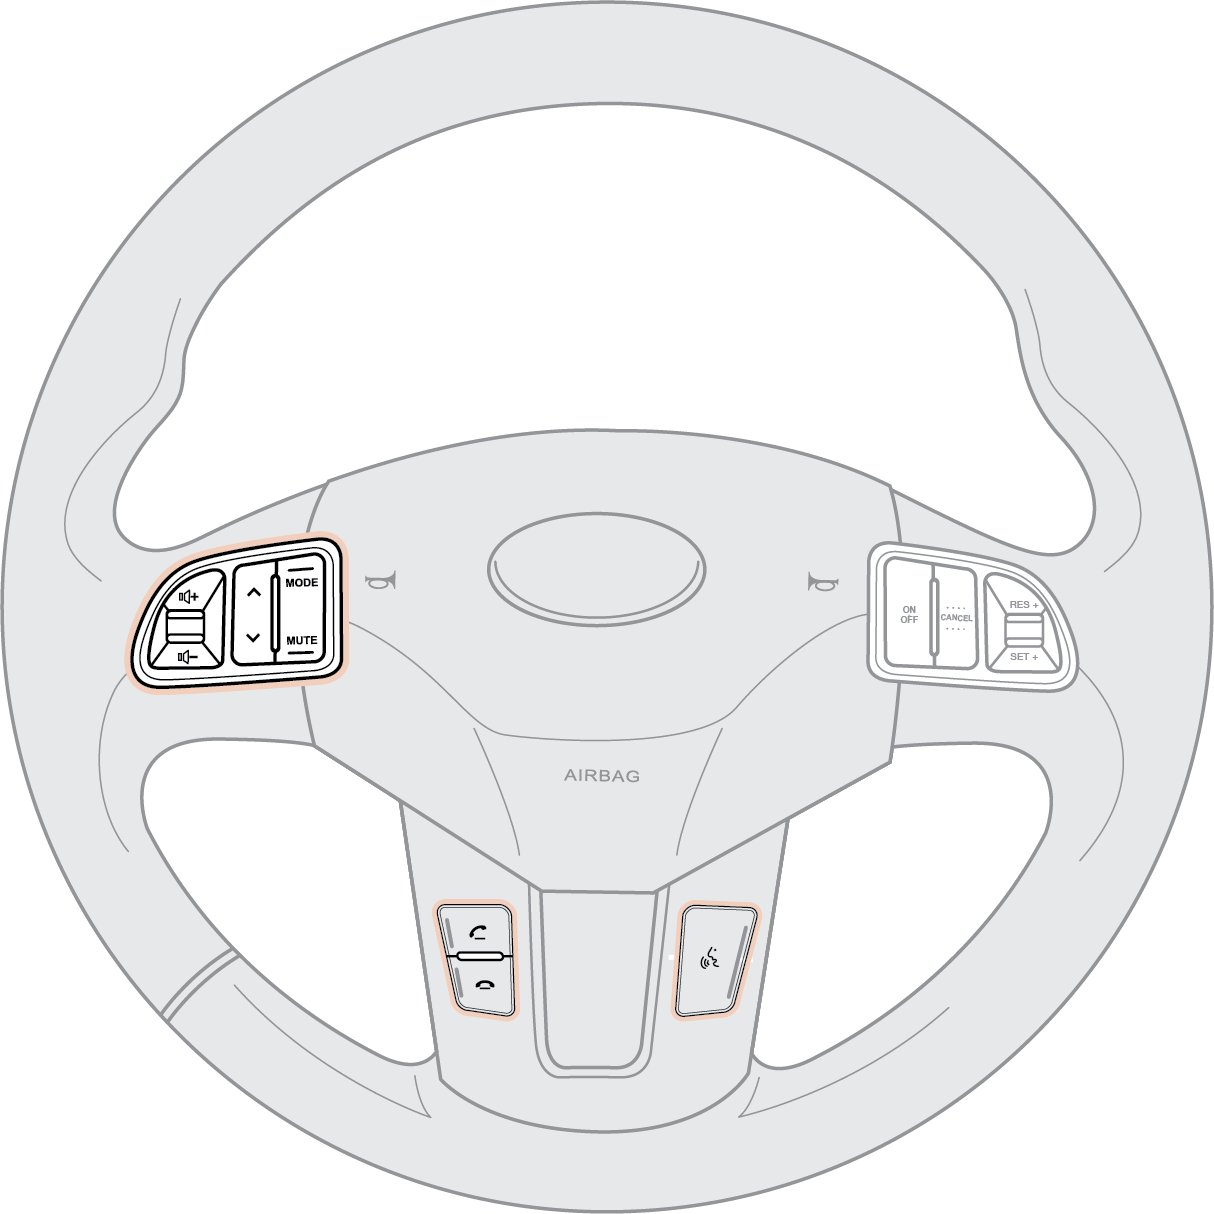 Kia Sportage Feature Function Guide - Apercher Brochure Design - steering wheel illustration